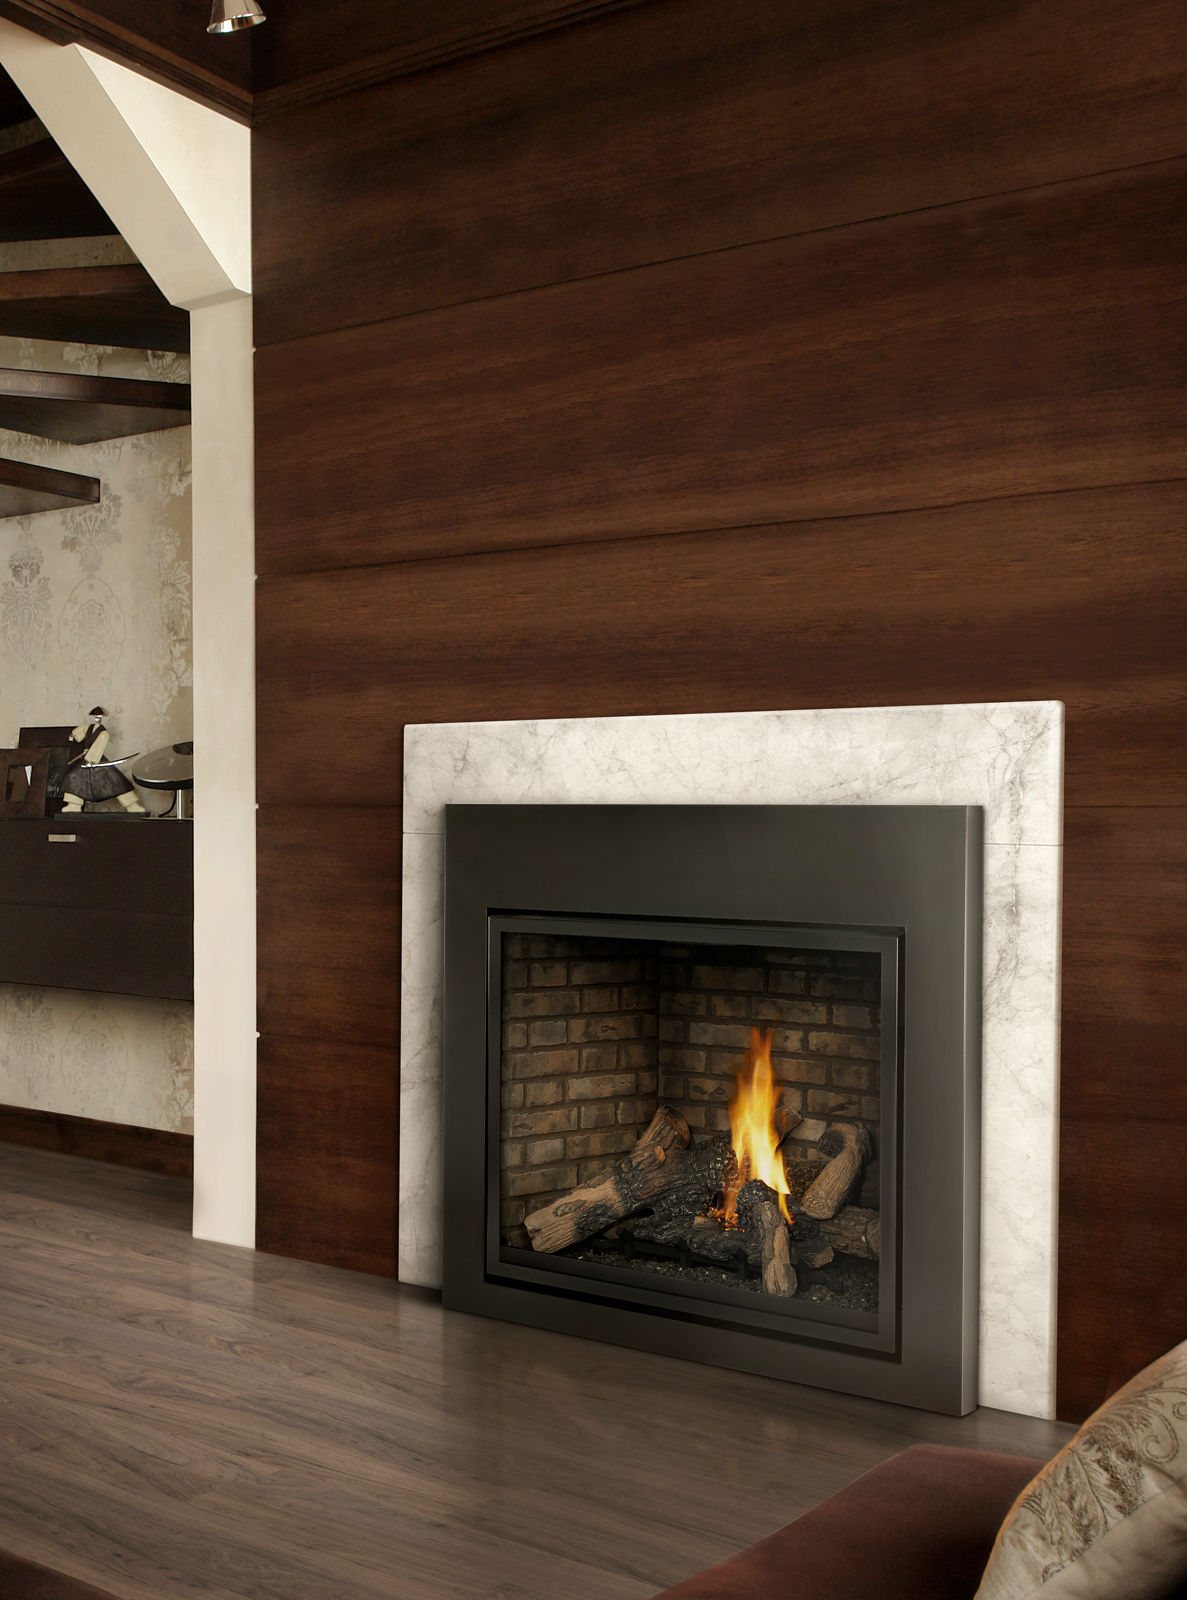 Heat N Glo Fireplace Flame Adjustment Luxury Chdx40